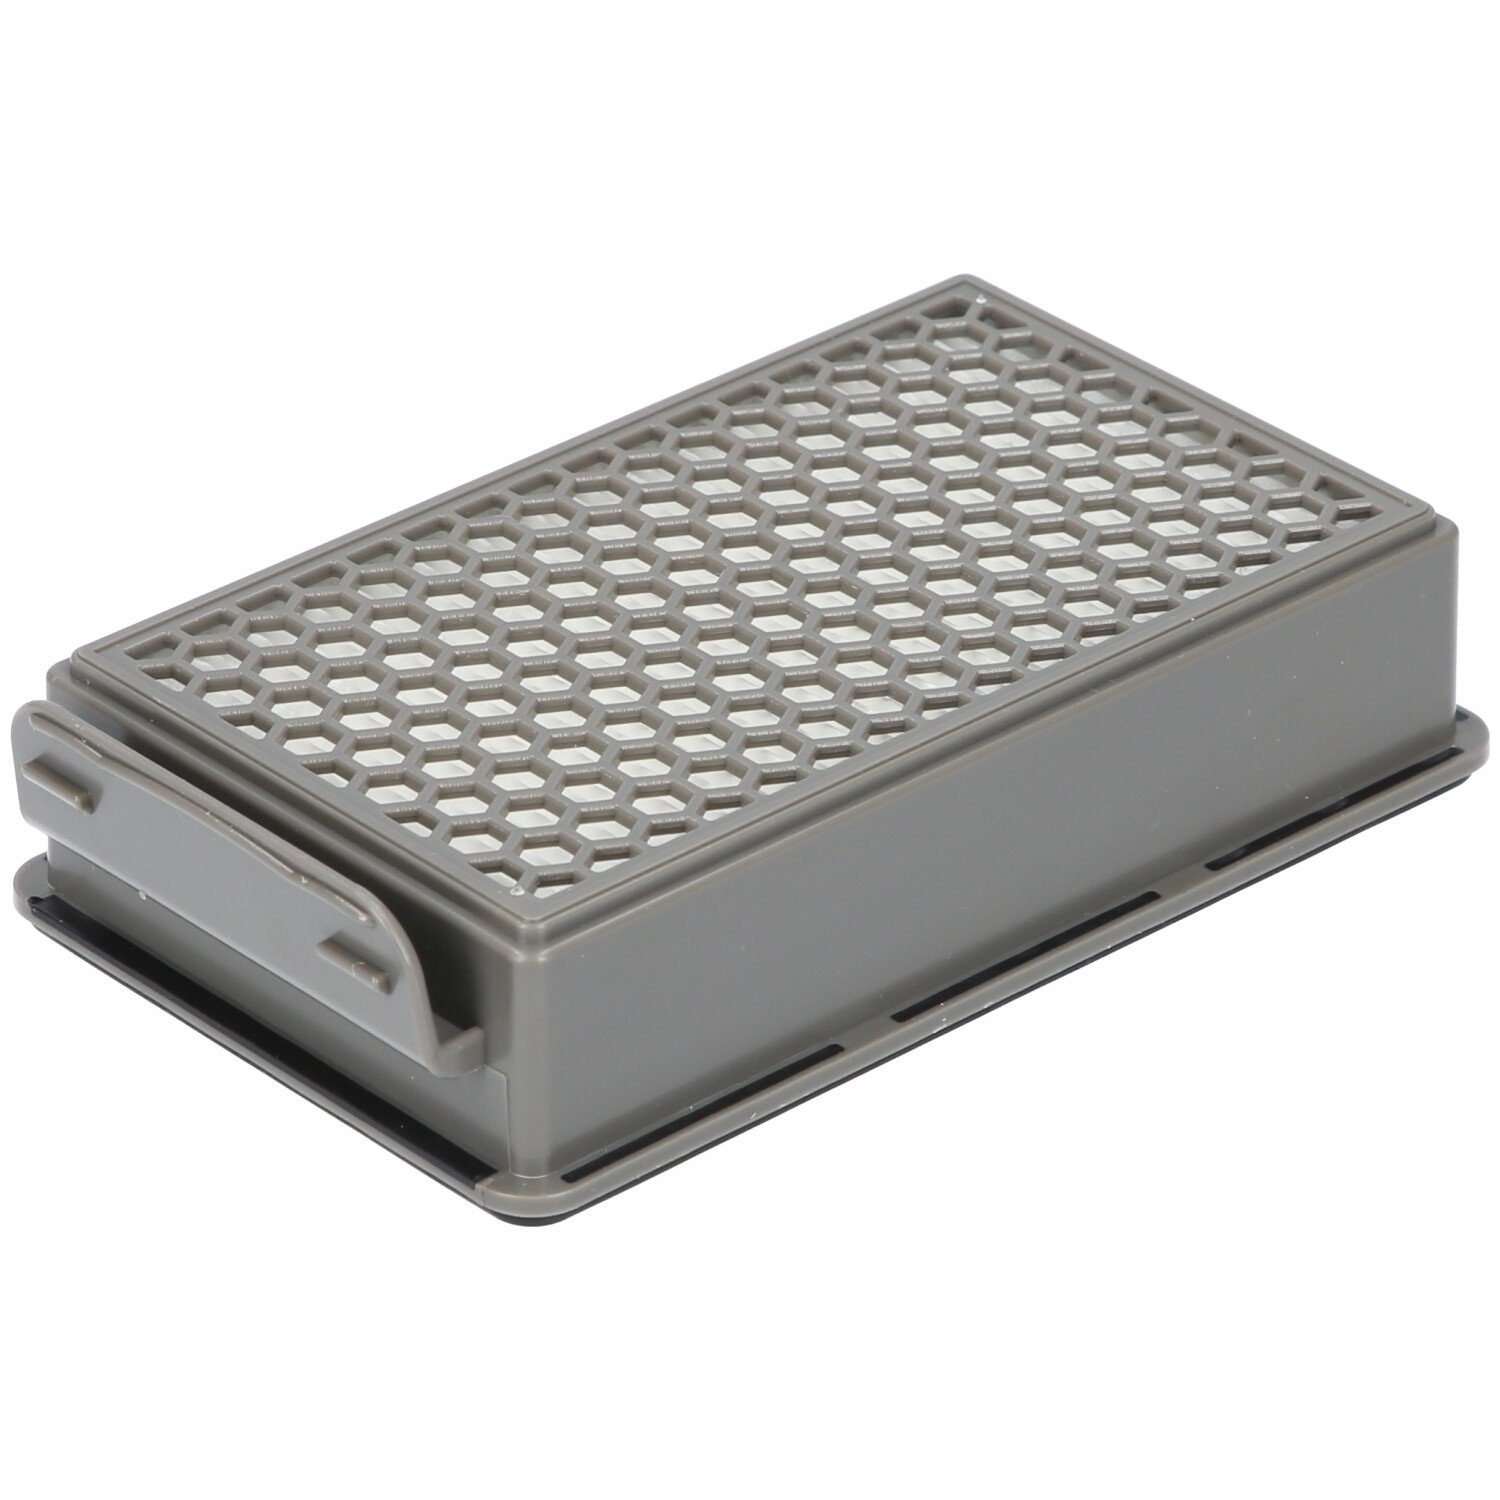 McFilter Filter-Set geeignet für Tefal Filterkassette, ZR005901 TW3753EA 1x TW3731RA Alternative für Rundfilter, TW3724RA / 1x / TW3786RA, 